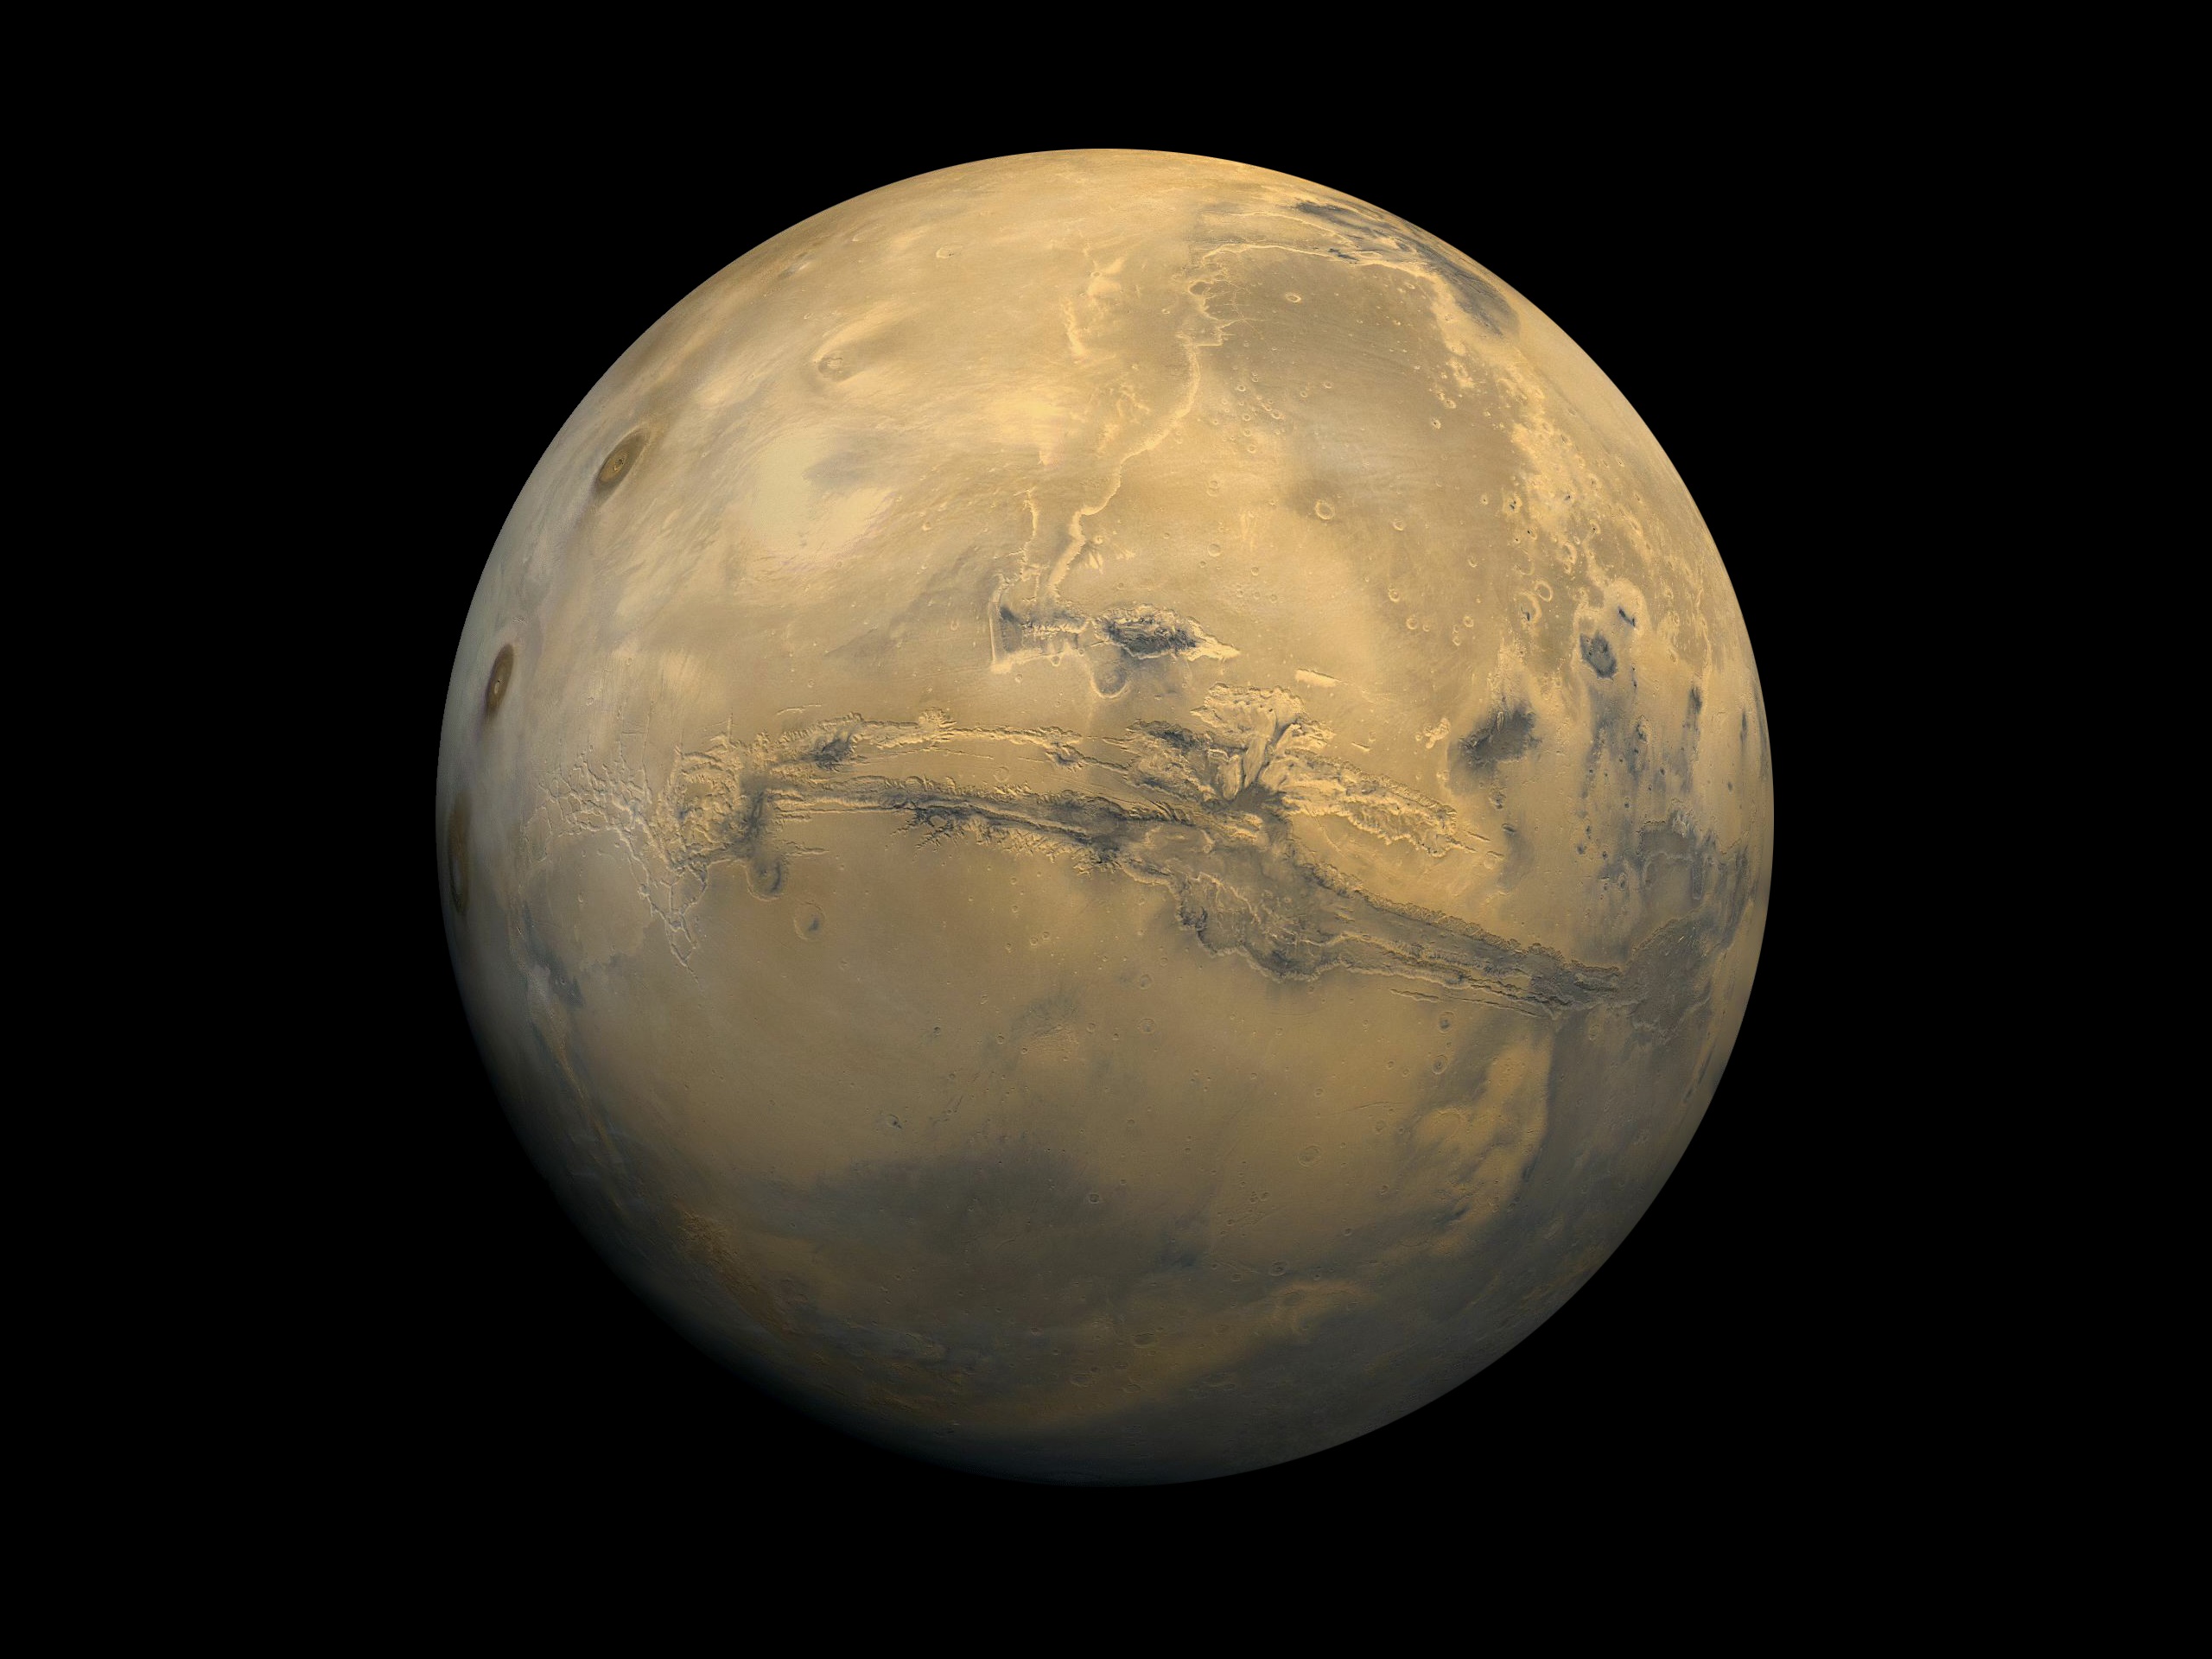 Mars 2560x1920. Tapeta, pozad na plochu PC. Obrzek ke staen zdarma